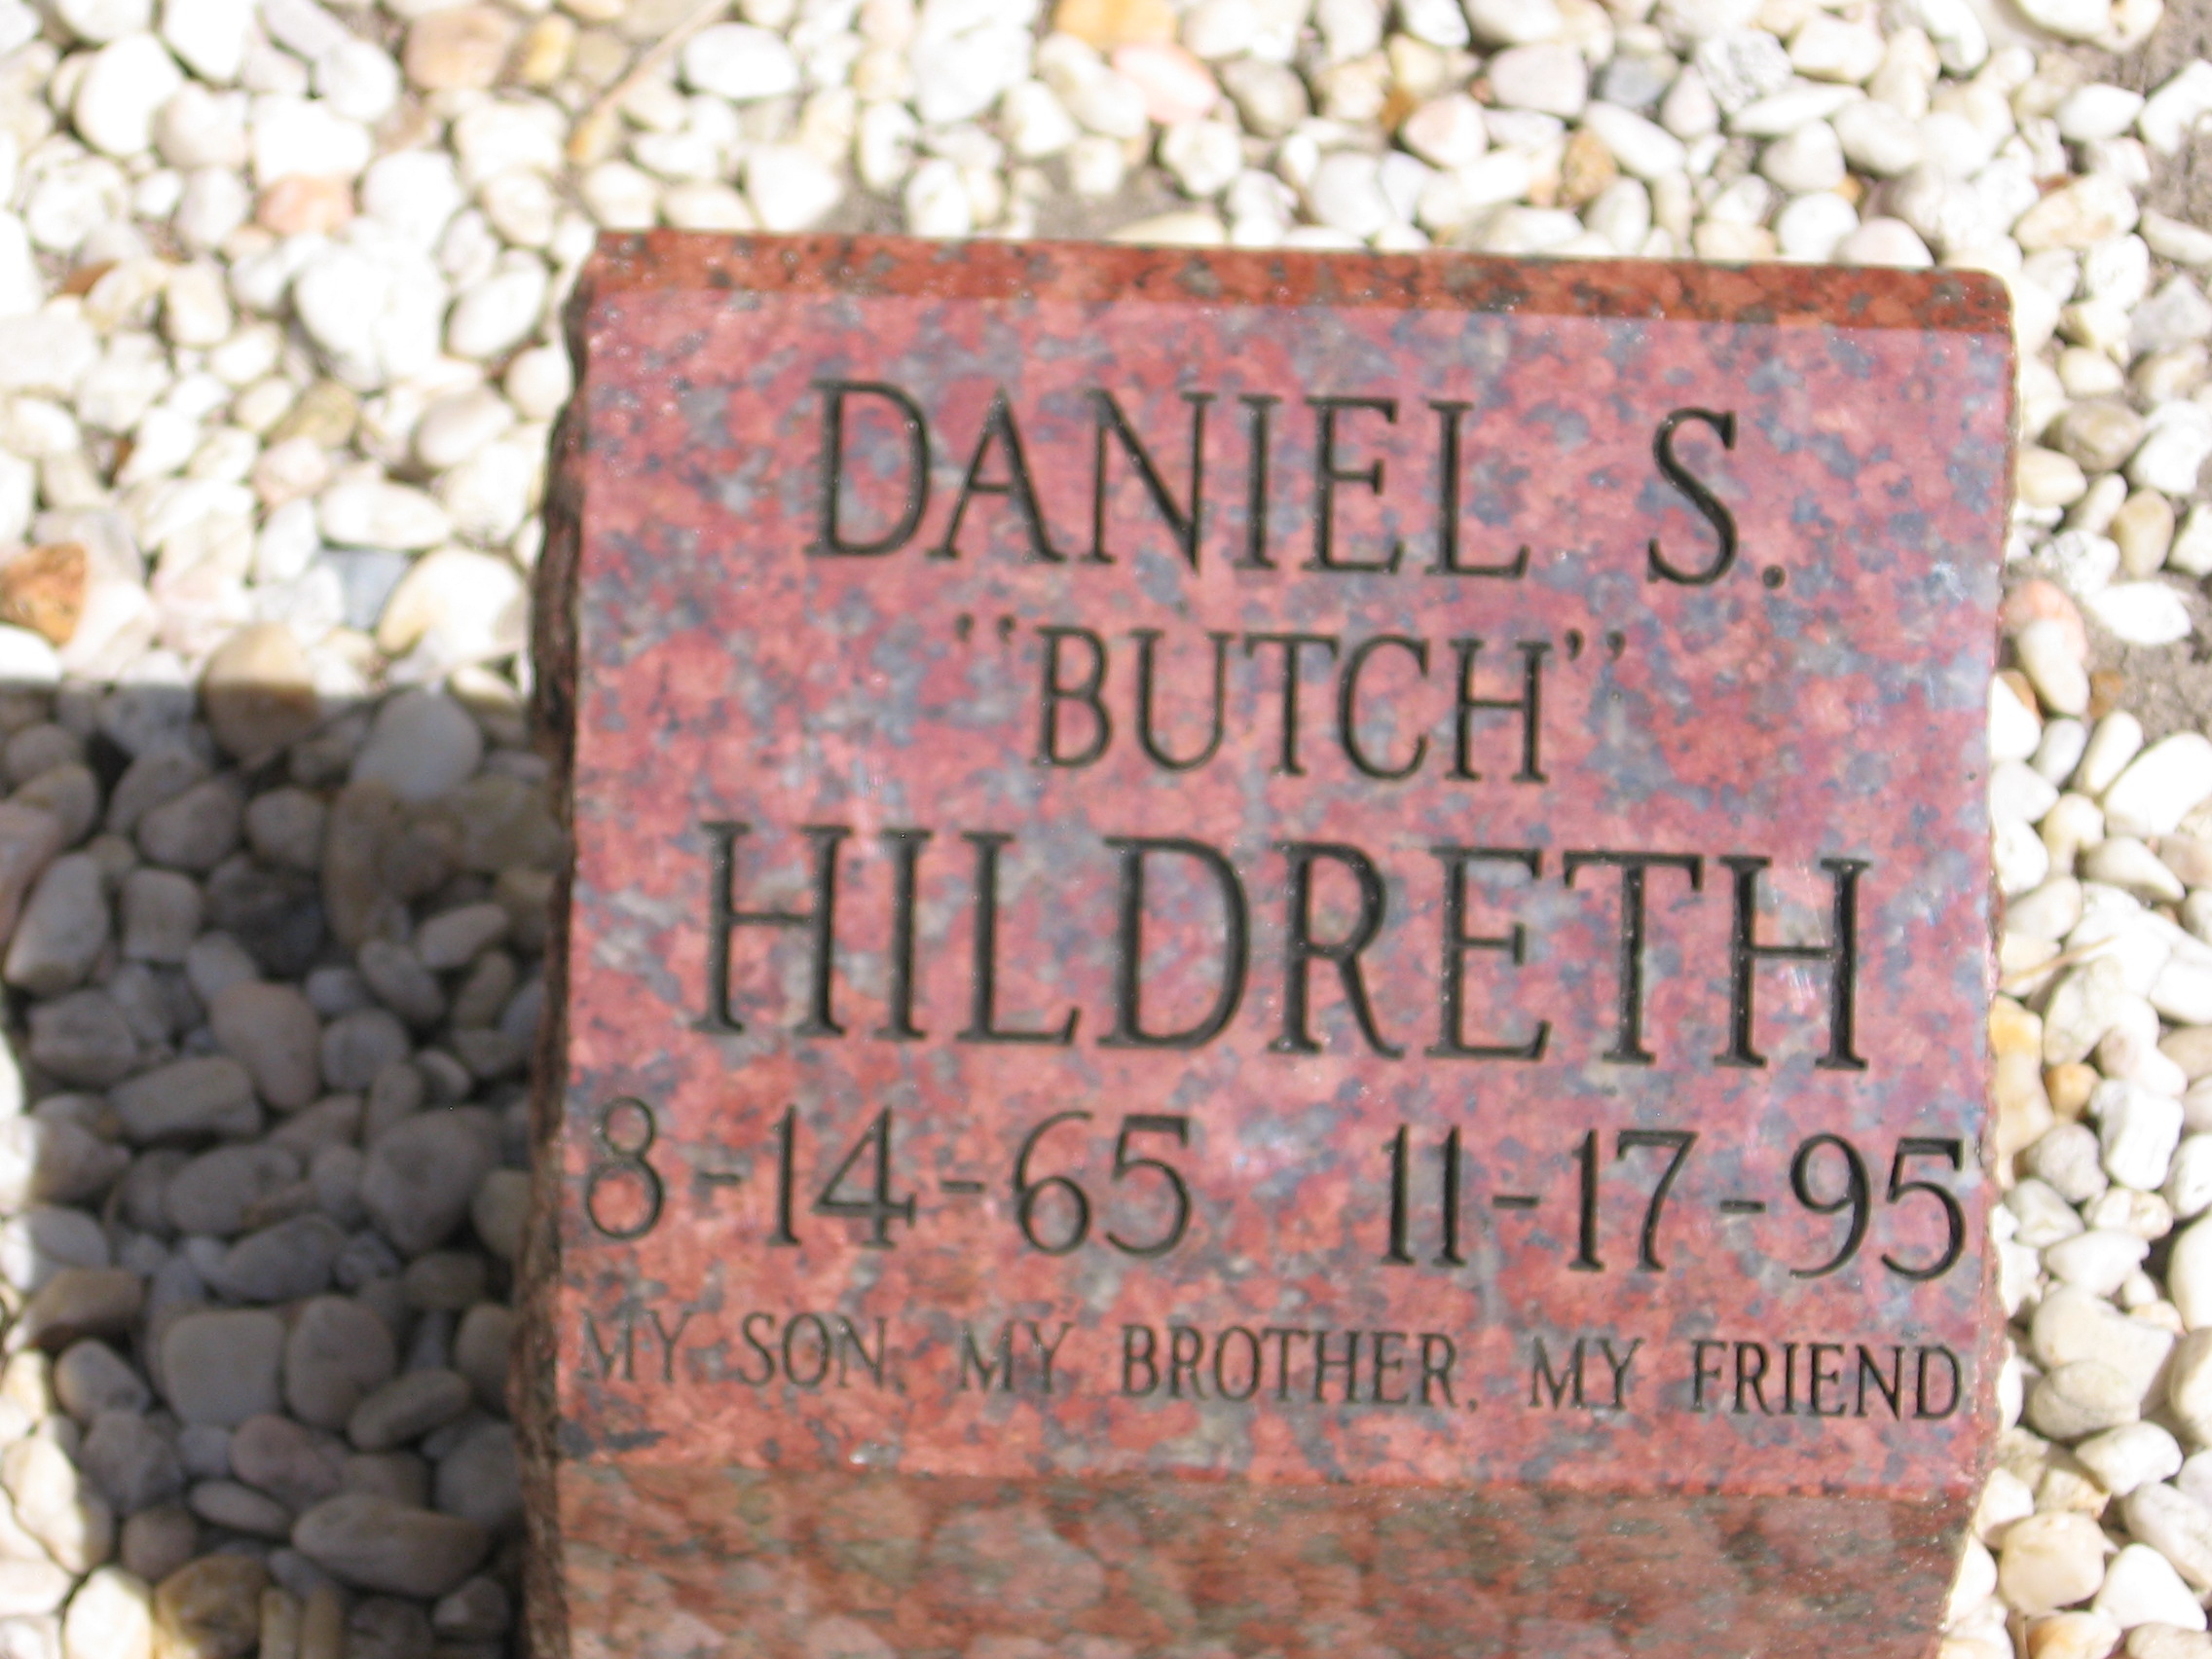 Daniel S "Butch" Hildreth